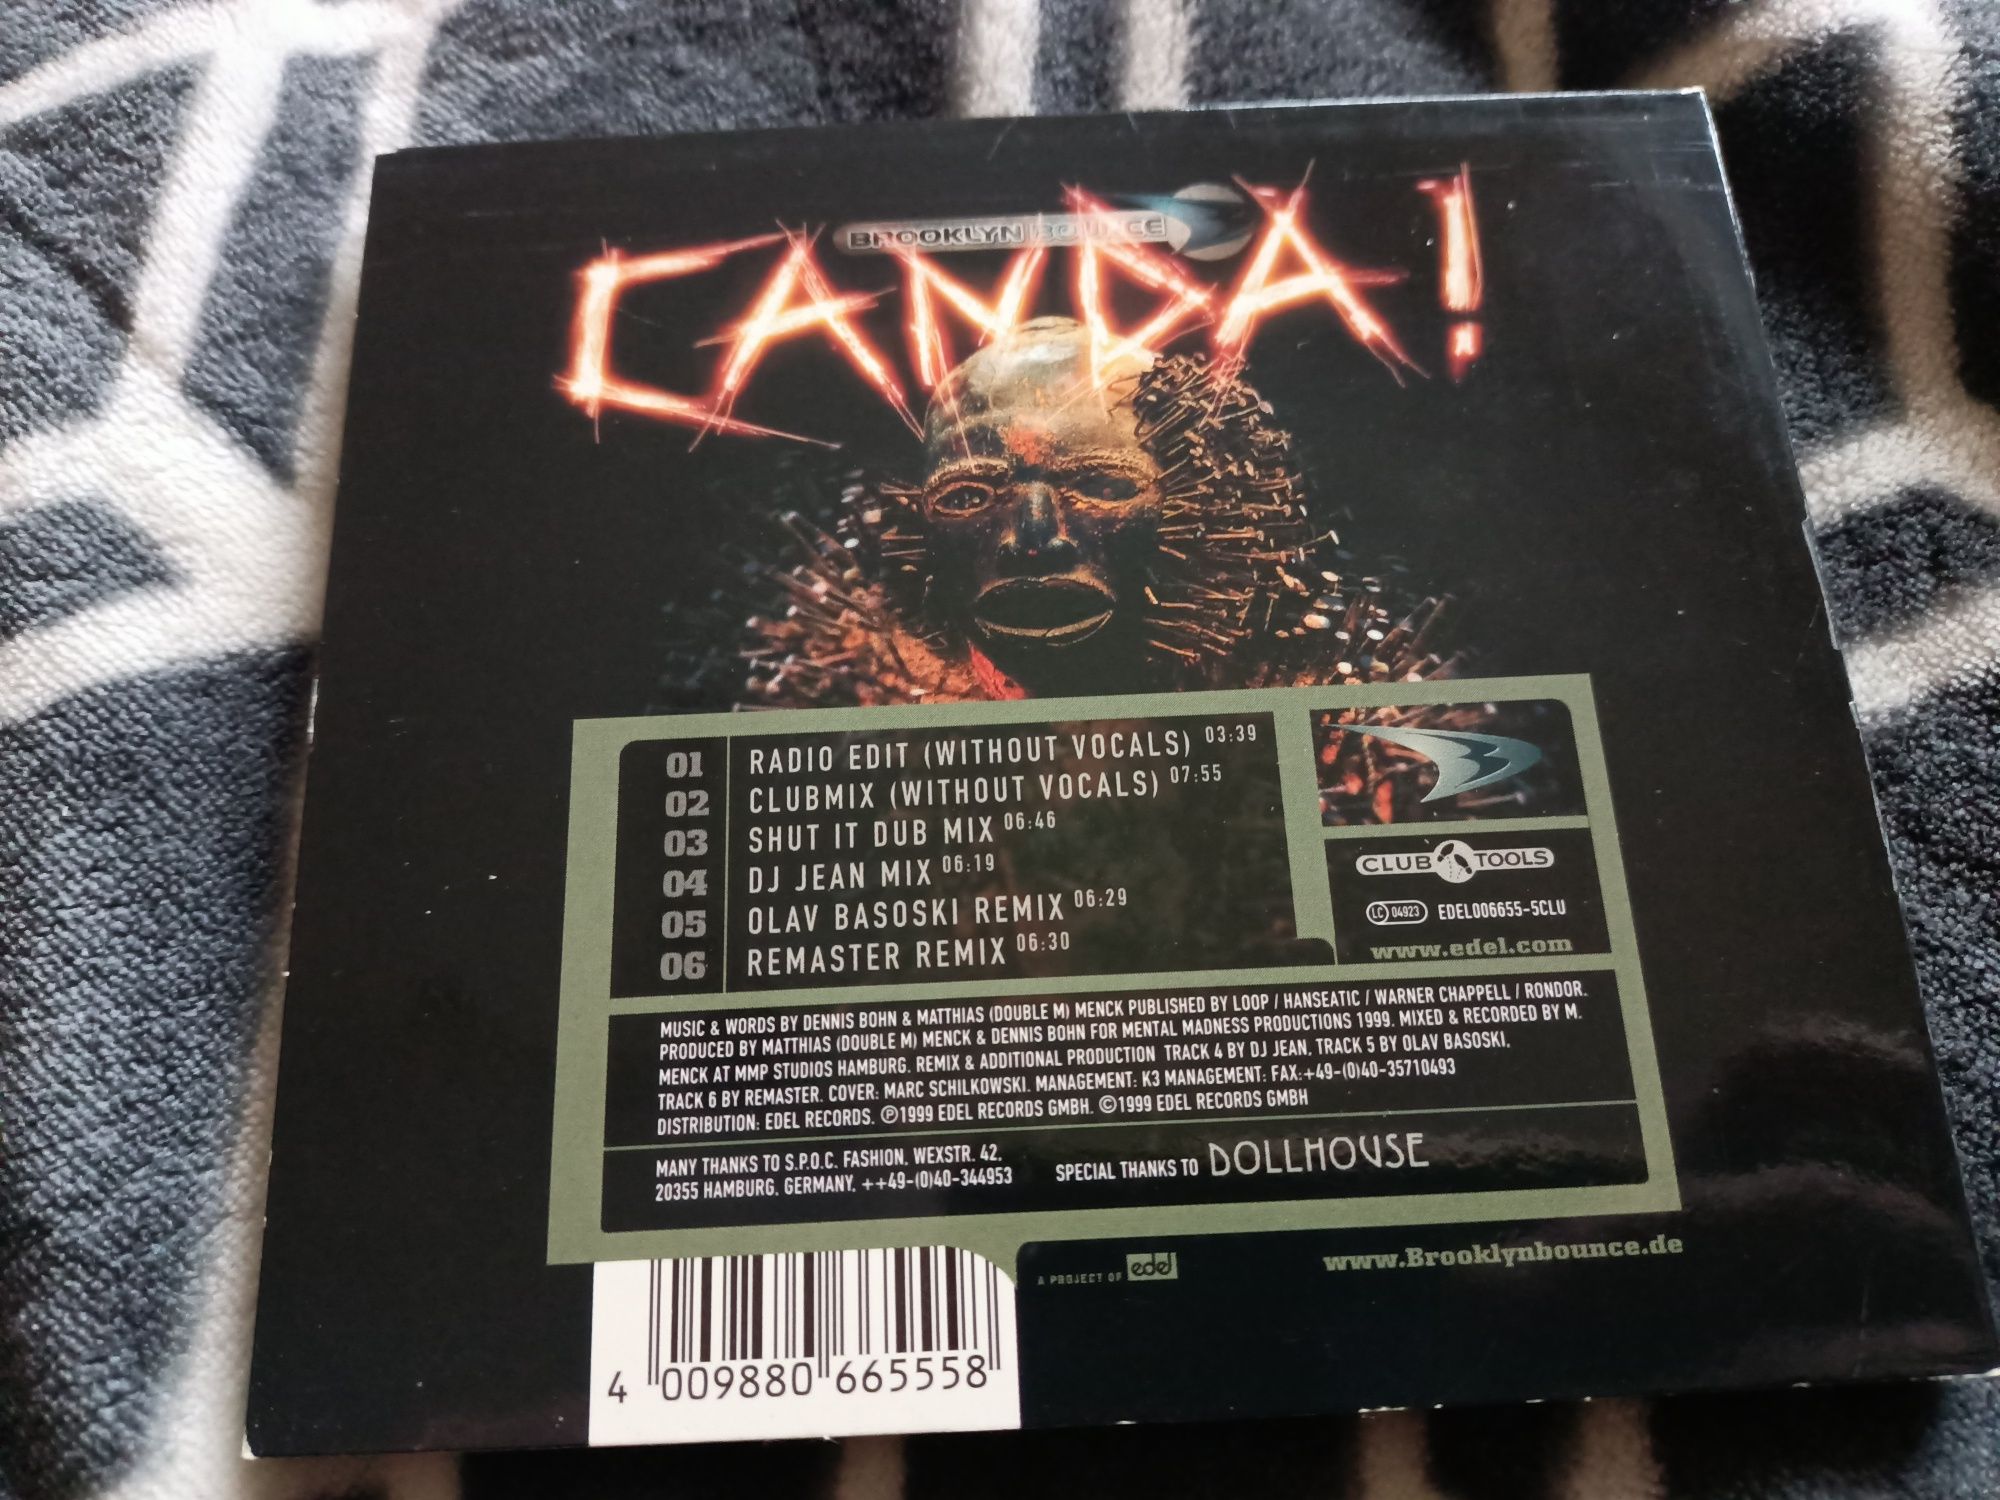 Brooklyn Bounce - Canda! Fan (CD, Maxi)(vg+)